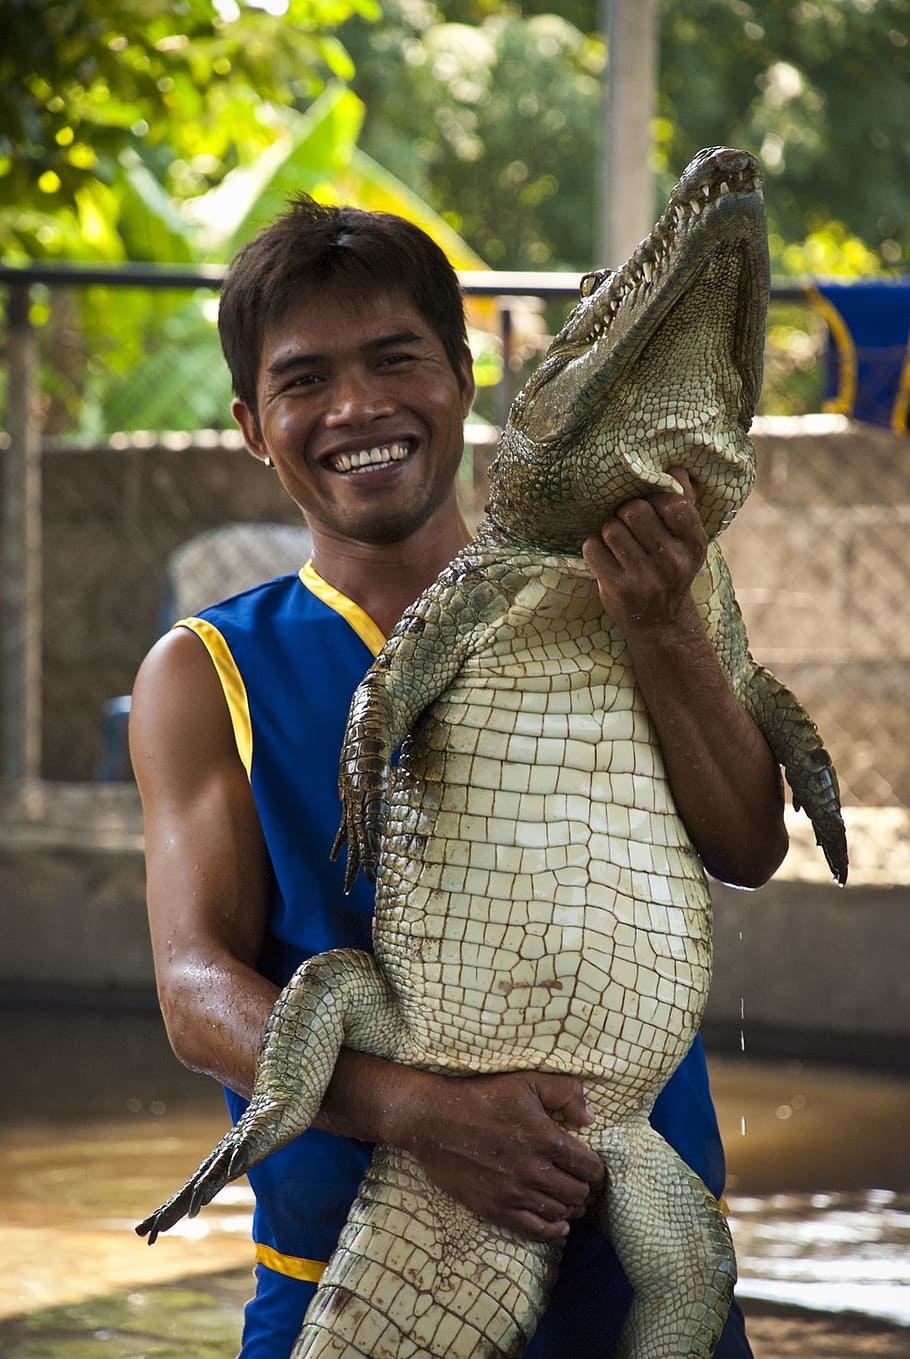 Crocodile, Alligator, Zoo, Circus, predator, dangerous, teeth, animal, reptile, green